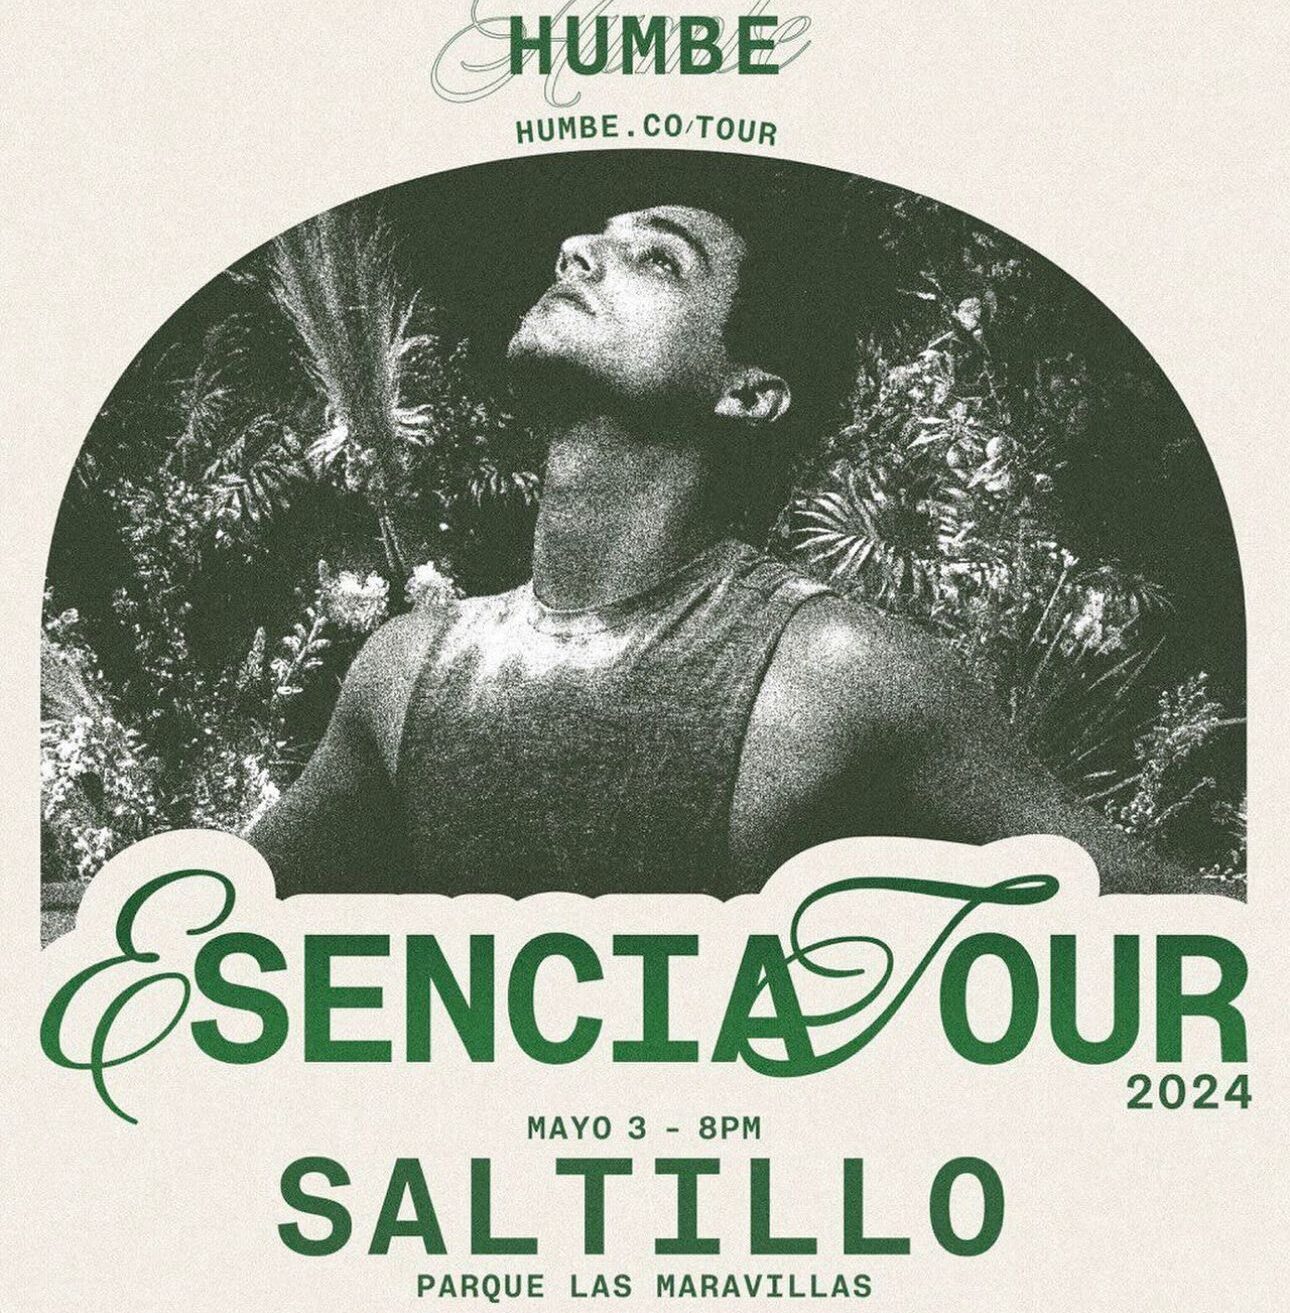 Humbe anuncia su gira “Esencia Tour 2024”. Habrá fecha en Saltillo